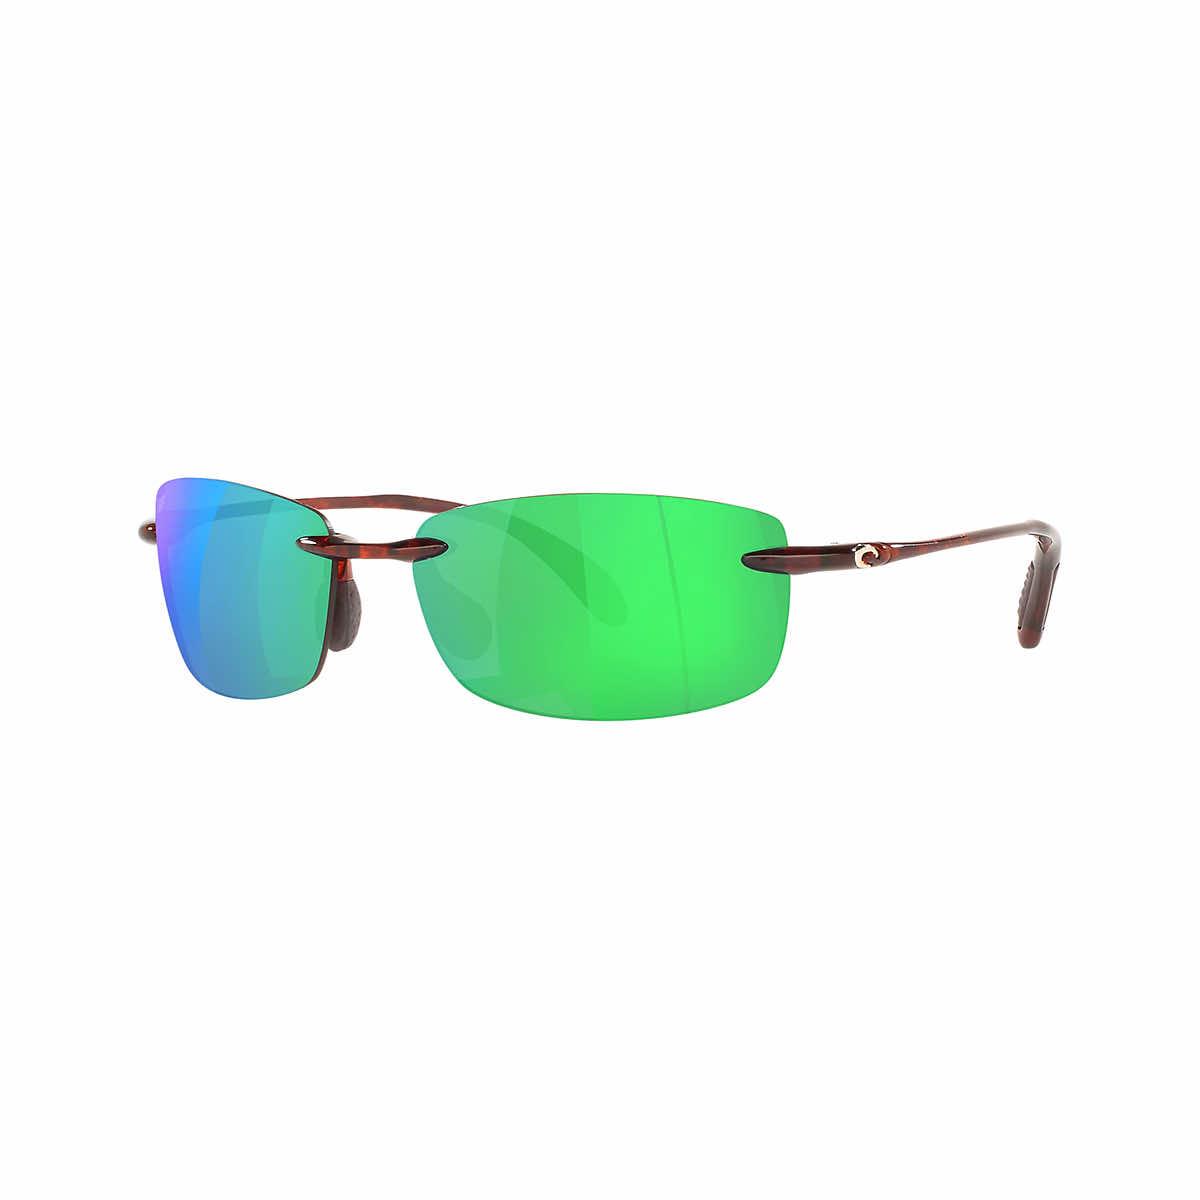  Ballast 580p Sunglasses - Polarized Plastic